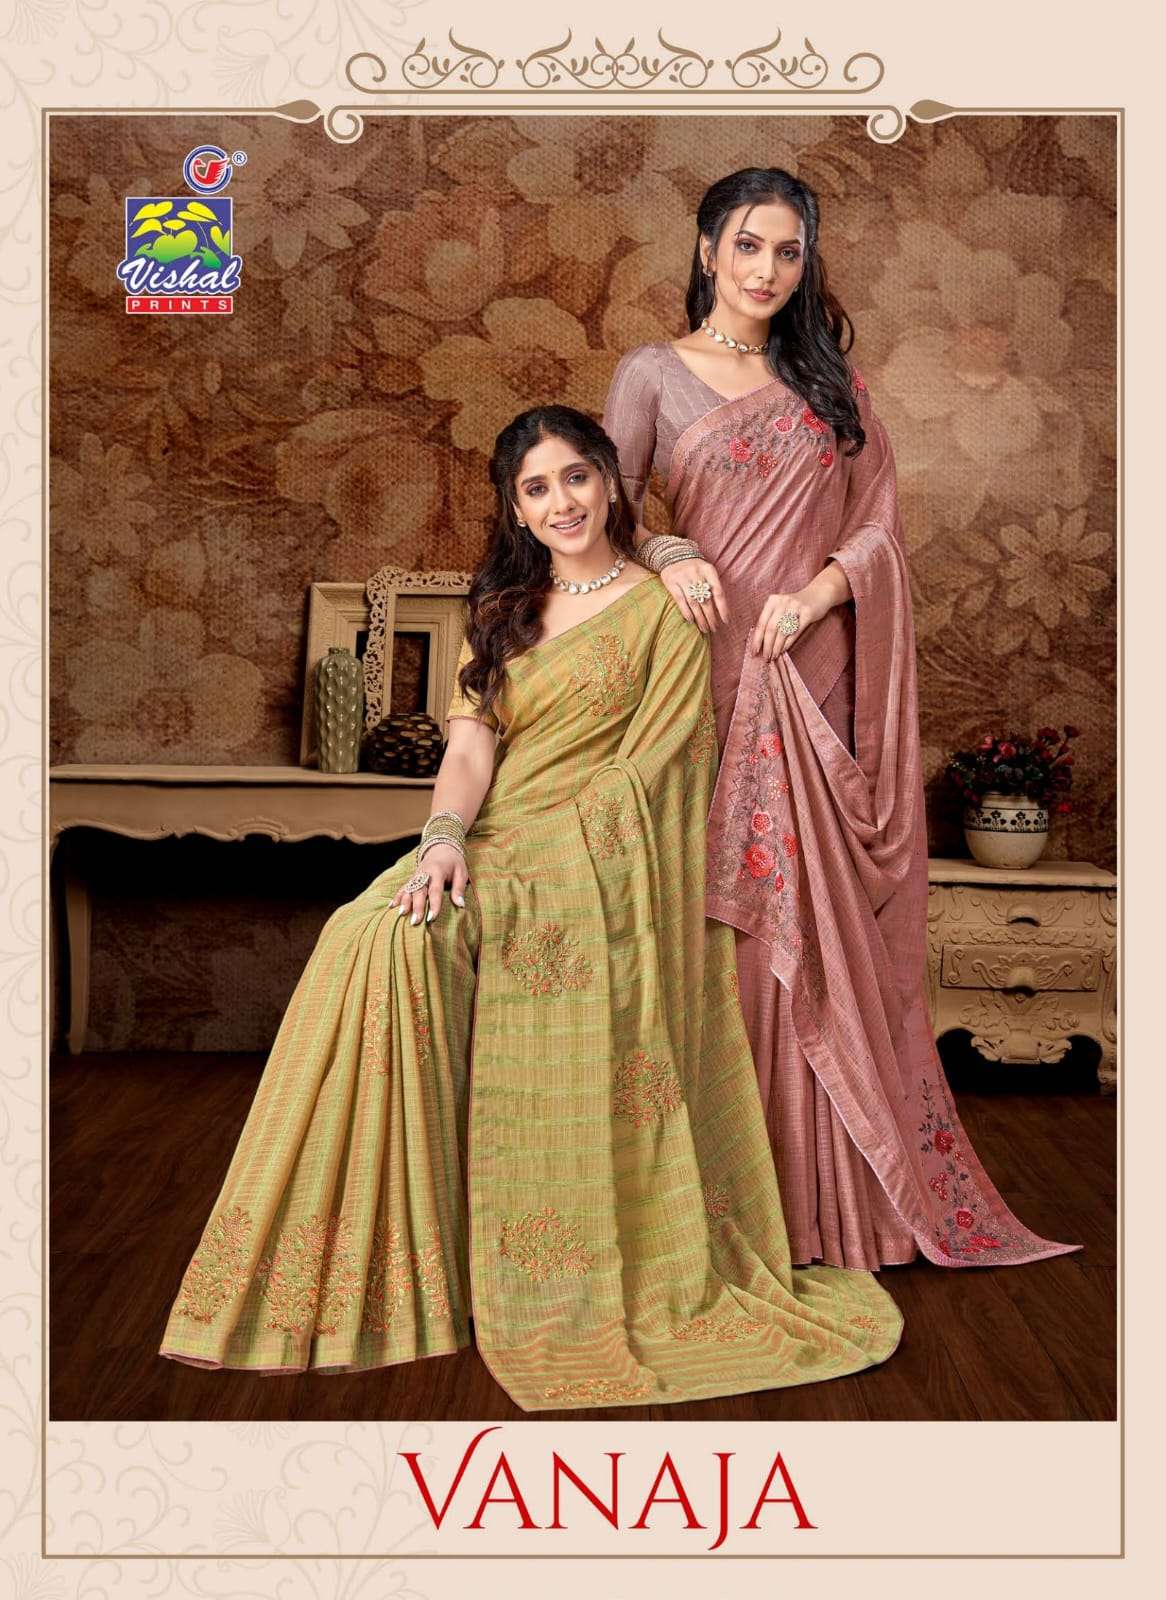 vishal prints present vanaja 46665-46670 fancy resham work saree supplier